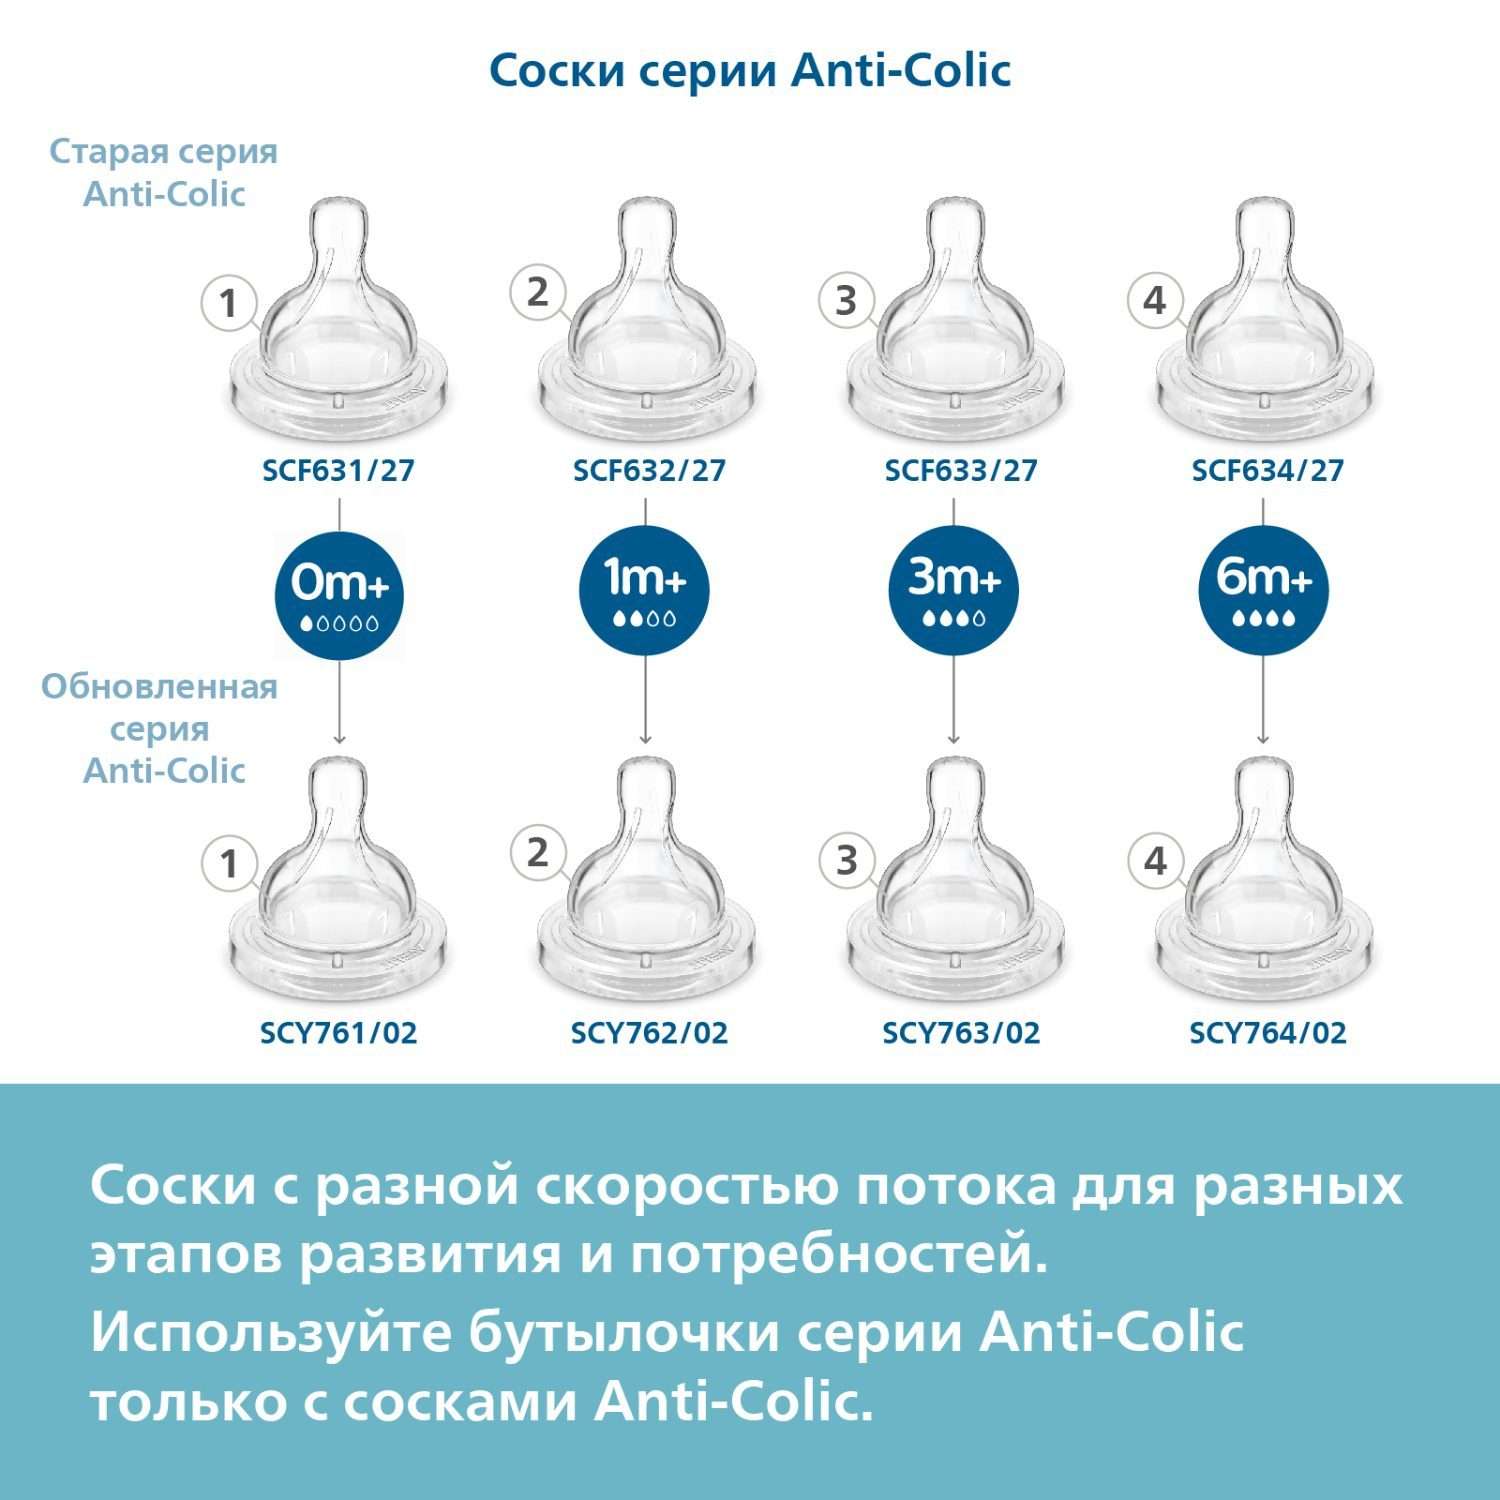 Соска для кормления Philips Avent Anti-colic с 3месяцев 2шт SCY763/02 - фото 7